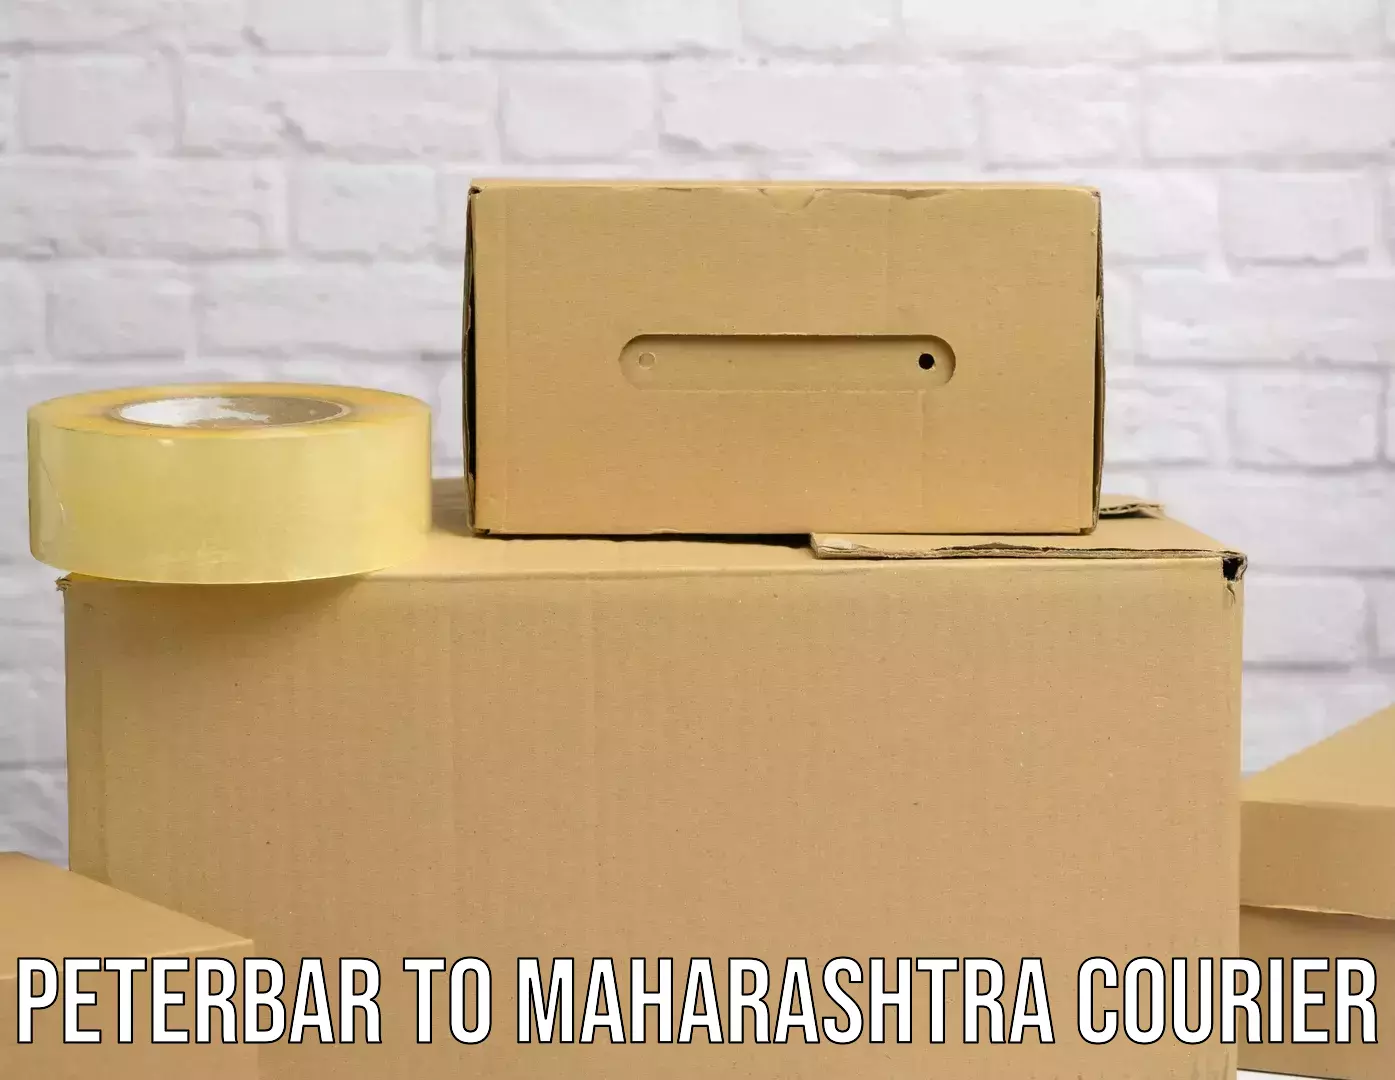 Business shipping needs Peterbar to Maharashtra